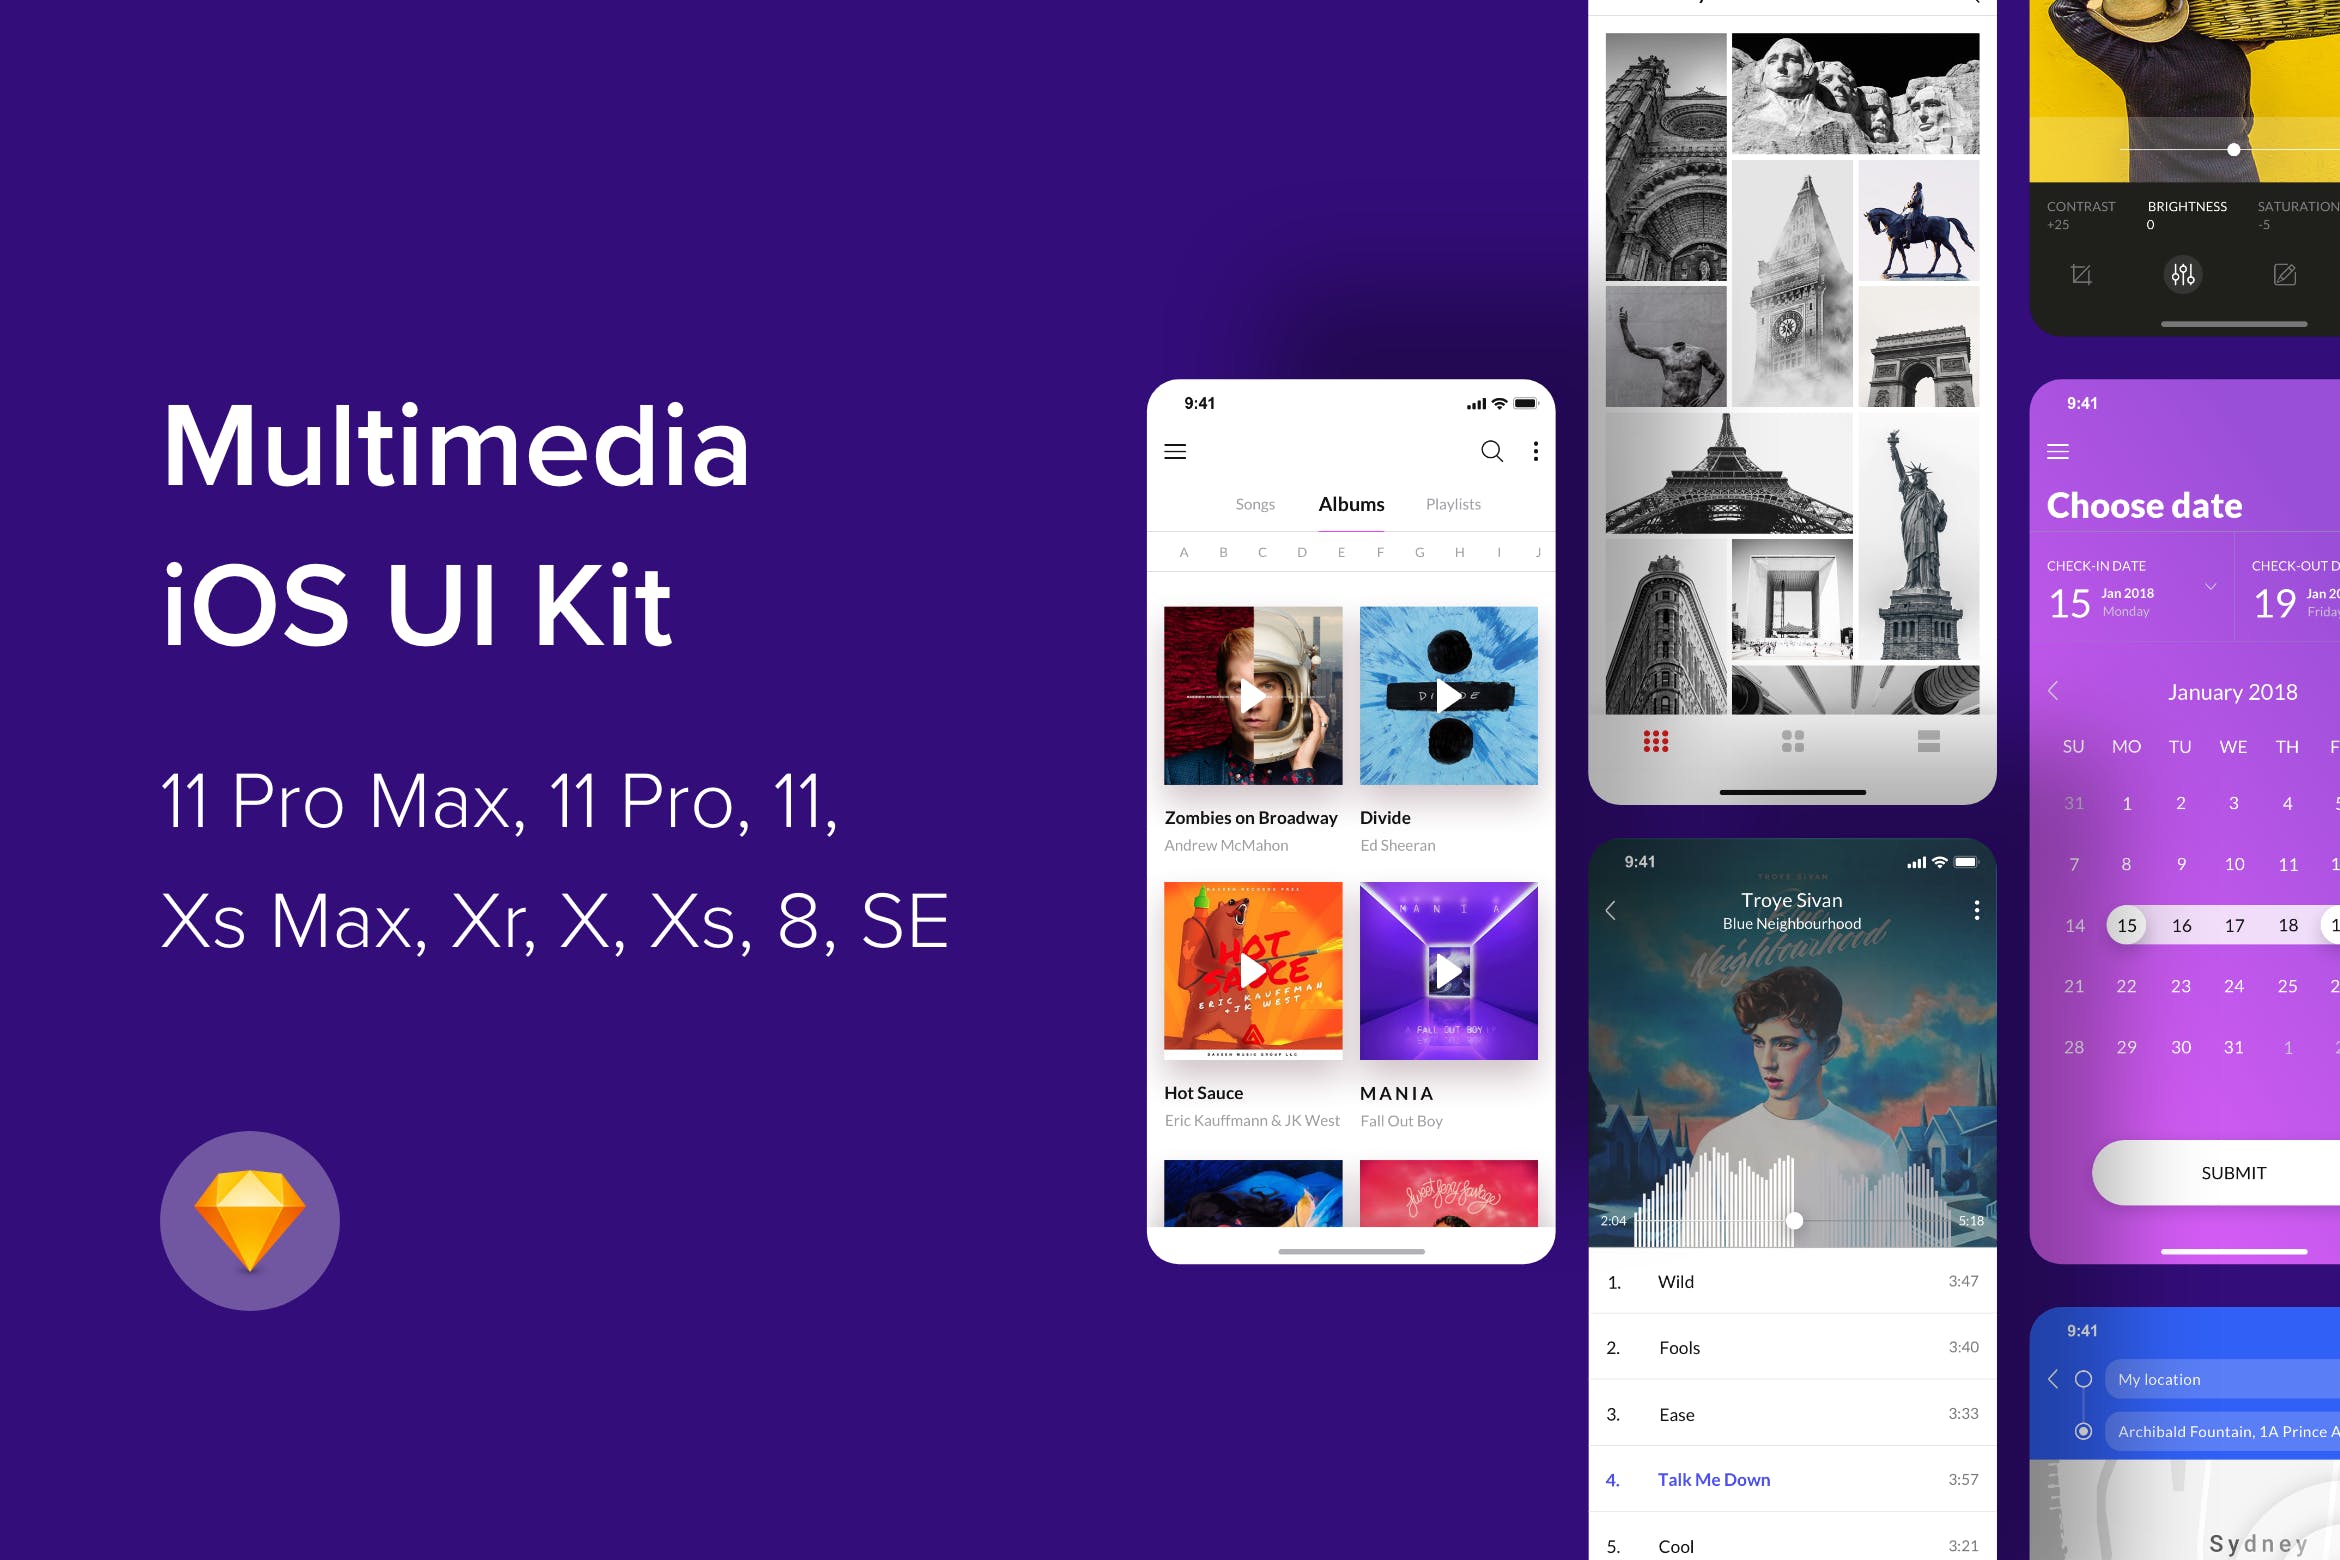 iOS平台多媒体娱乐APP应用UI设计SKETCH模板设计素材下载 Multimedia iOS UI Kit (Sketch)